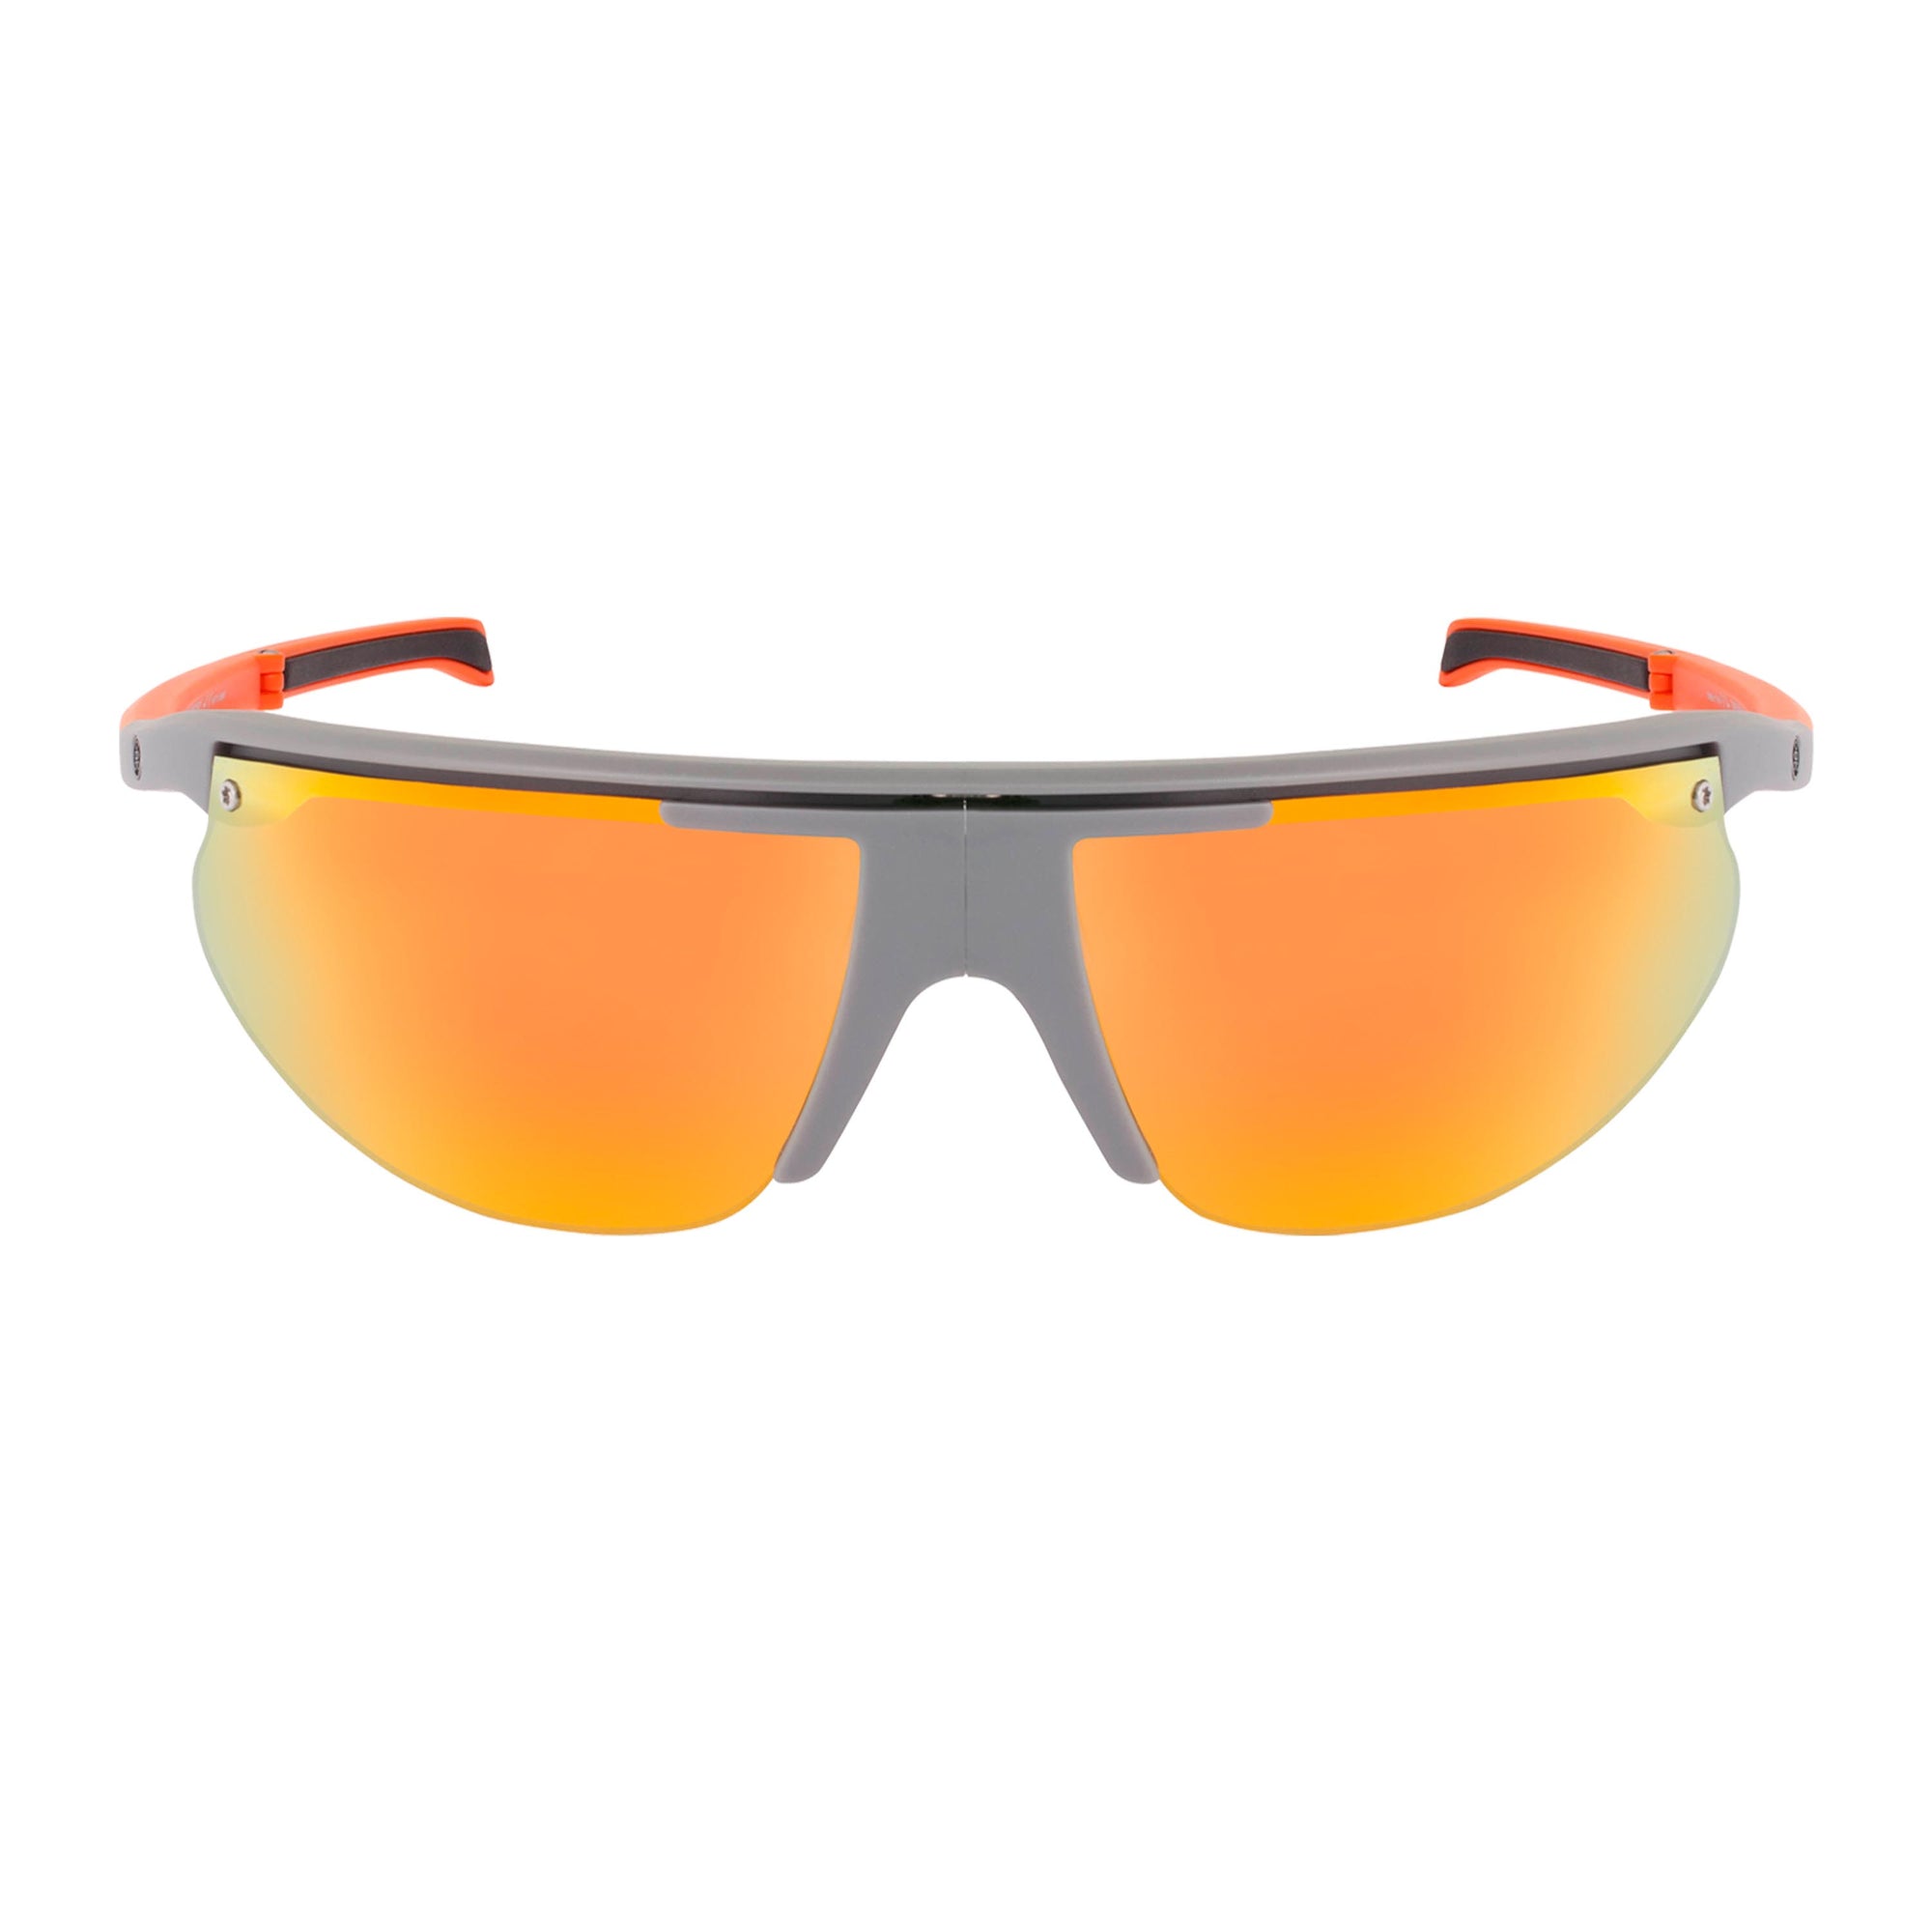 Popticals, Premium Compact Sunglasses, PopTrail, 010081-OMON, Polarized Sunglasses, Matte Gray/Orange Frame, Gray Lenses w/Orange Mirror Finish, Glam View